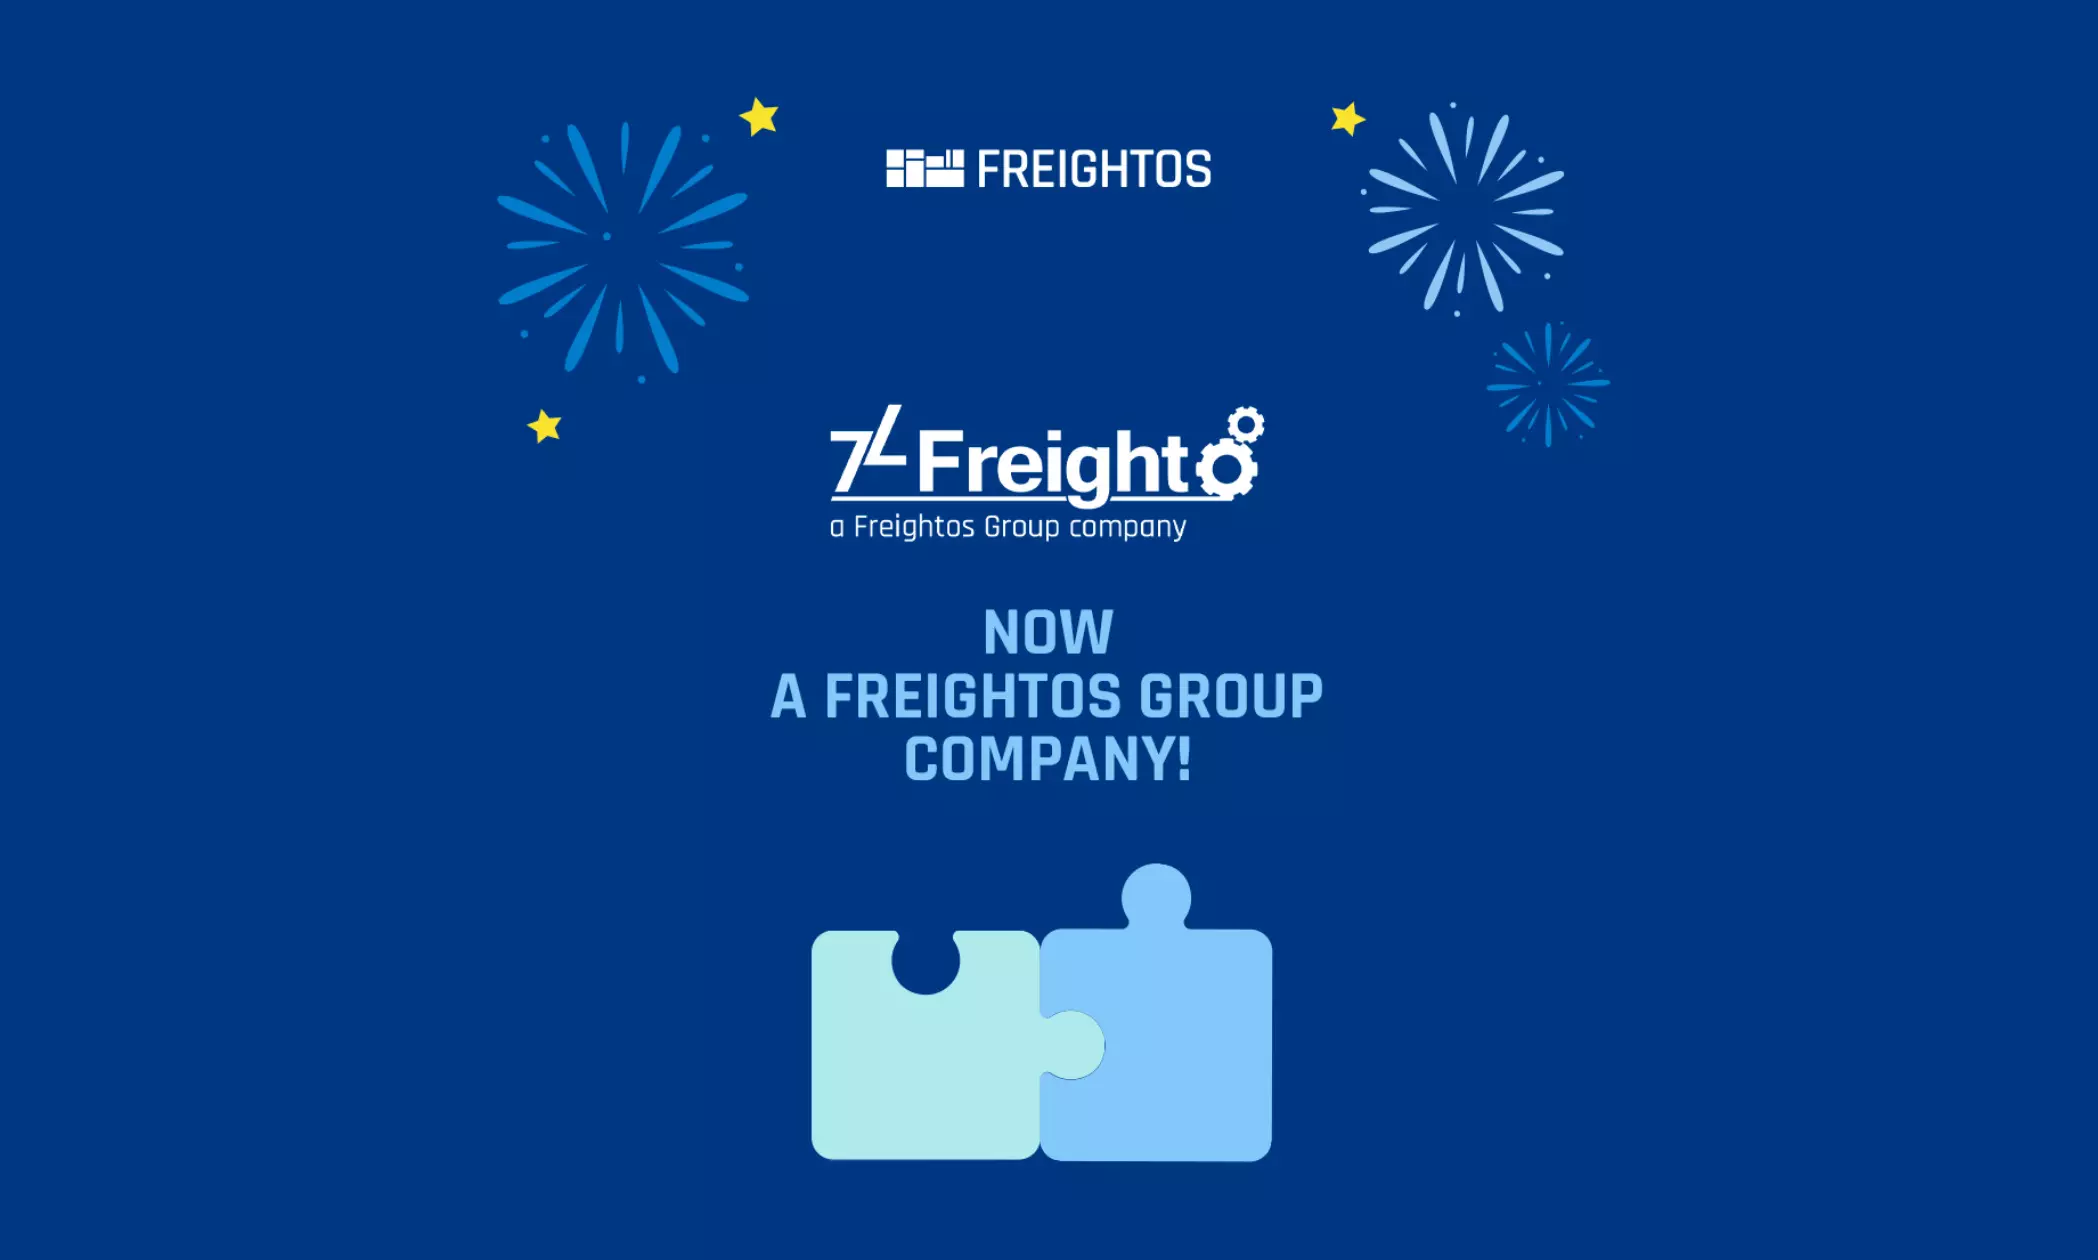 Freightos acquires 7LFreight